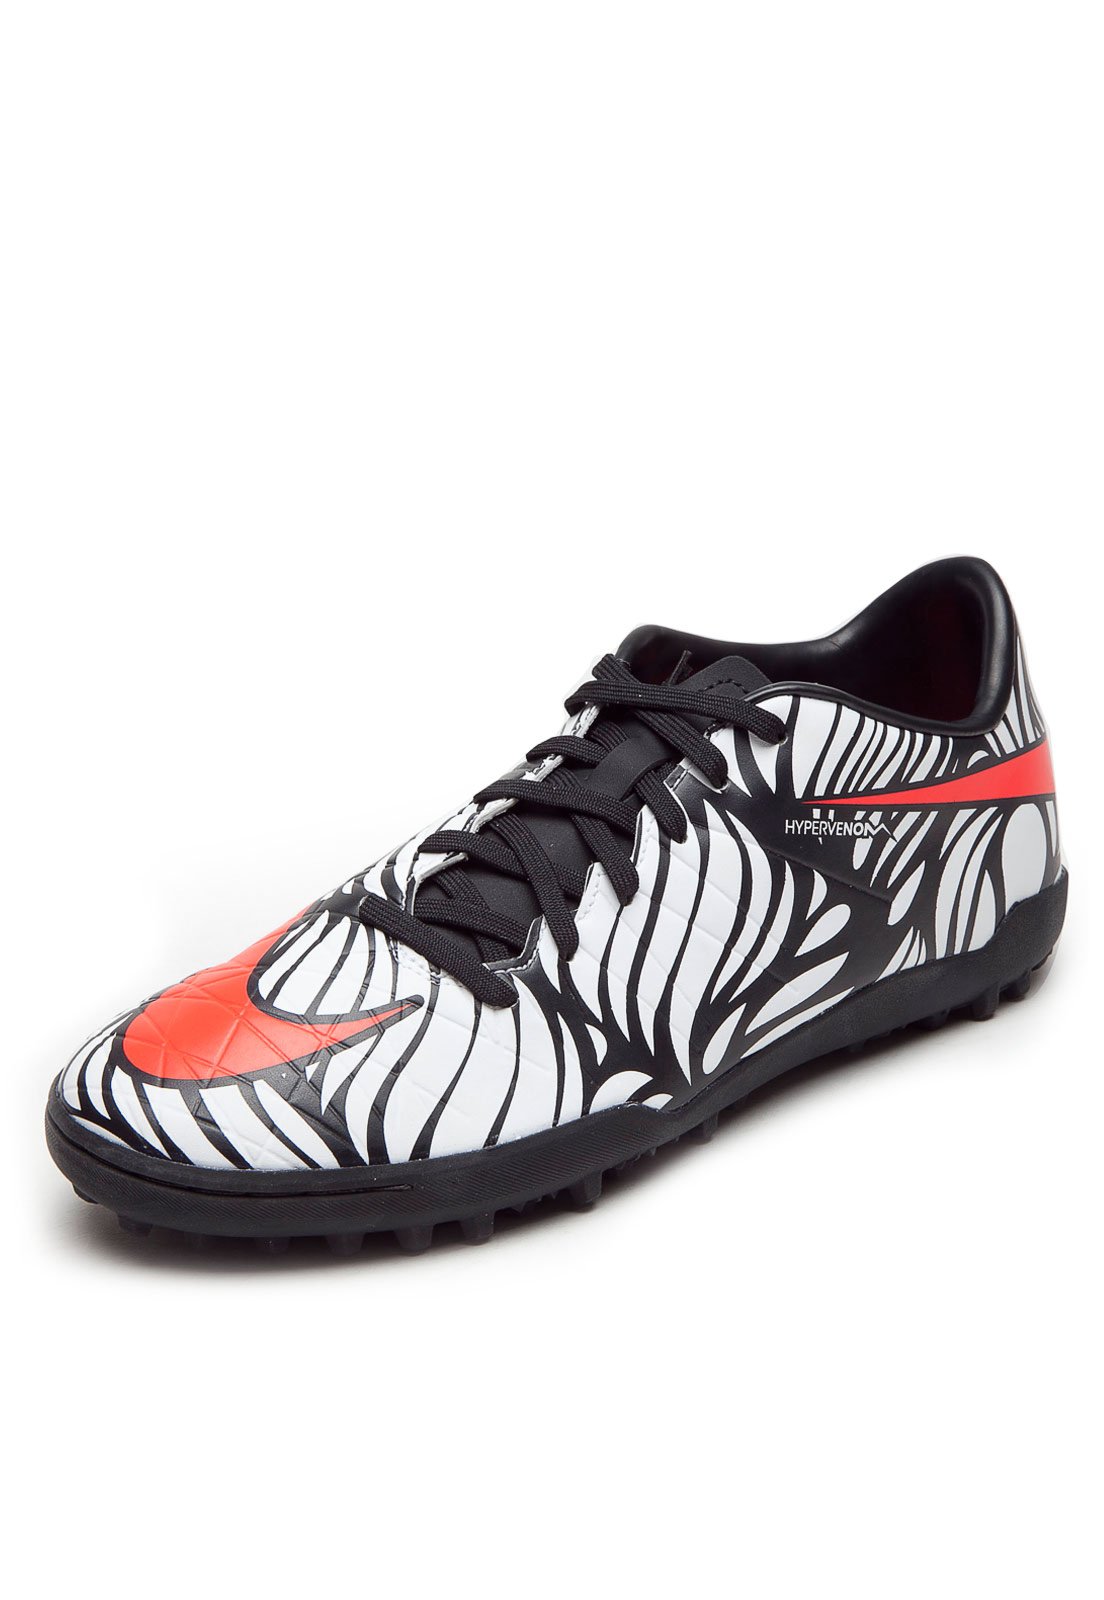 Chuteira Nike Hypervenom Phelon Ii Njr Tf - Compre Agora | Kanui